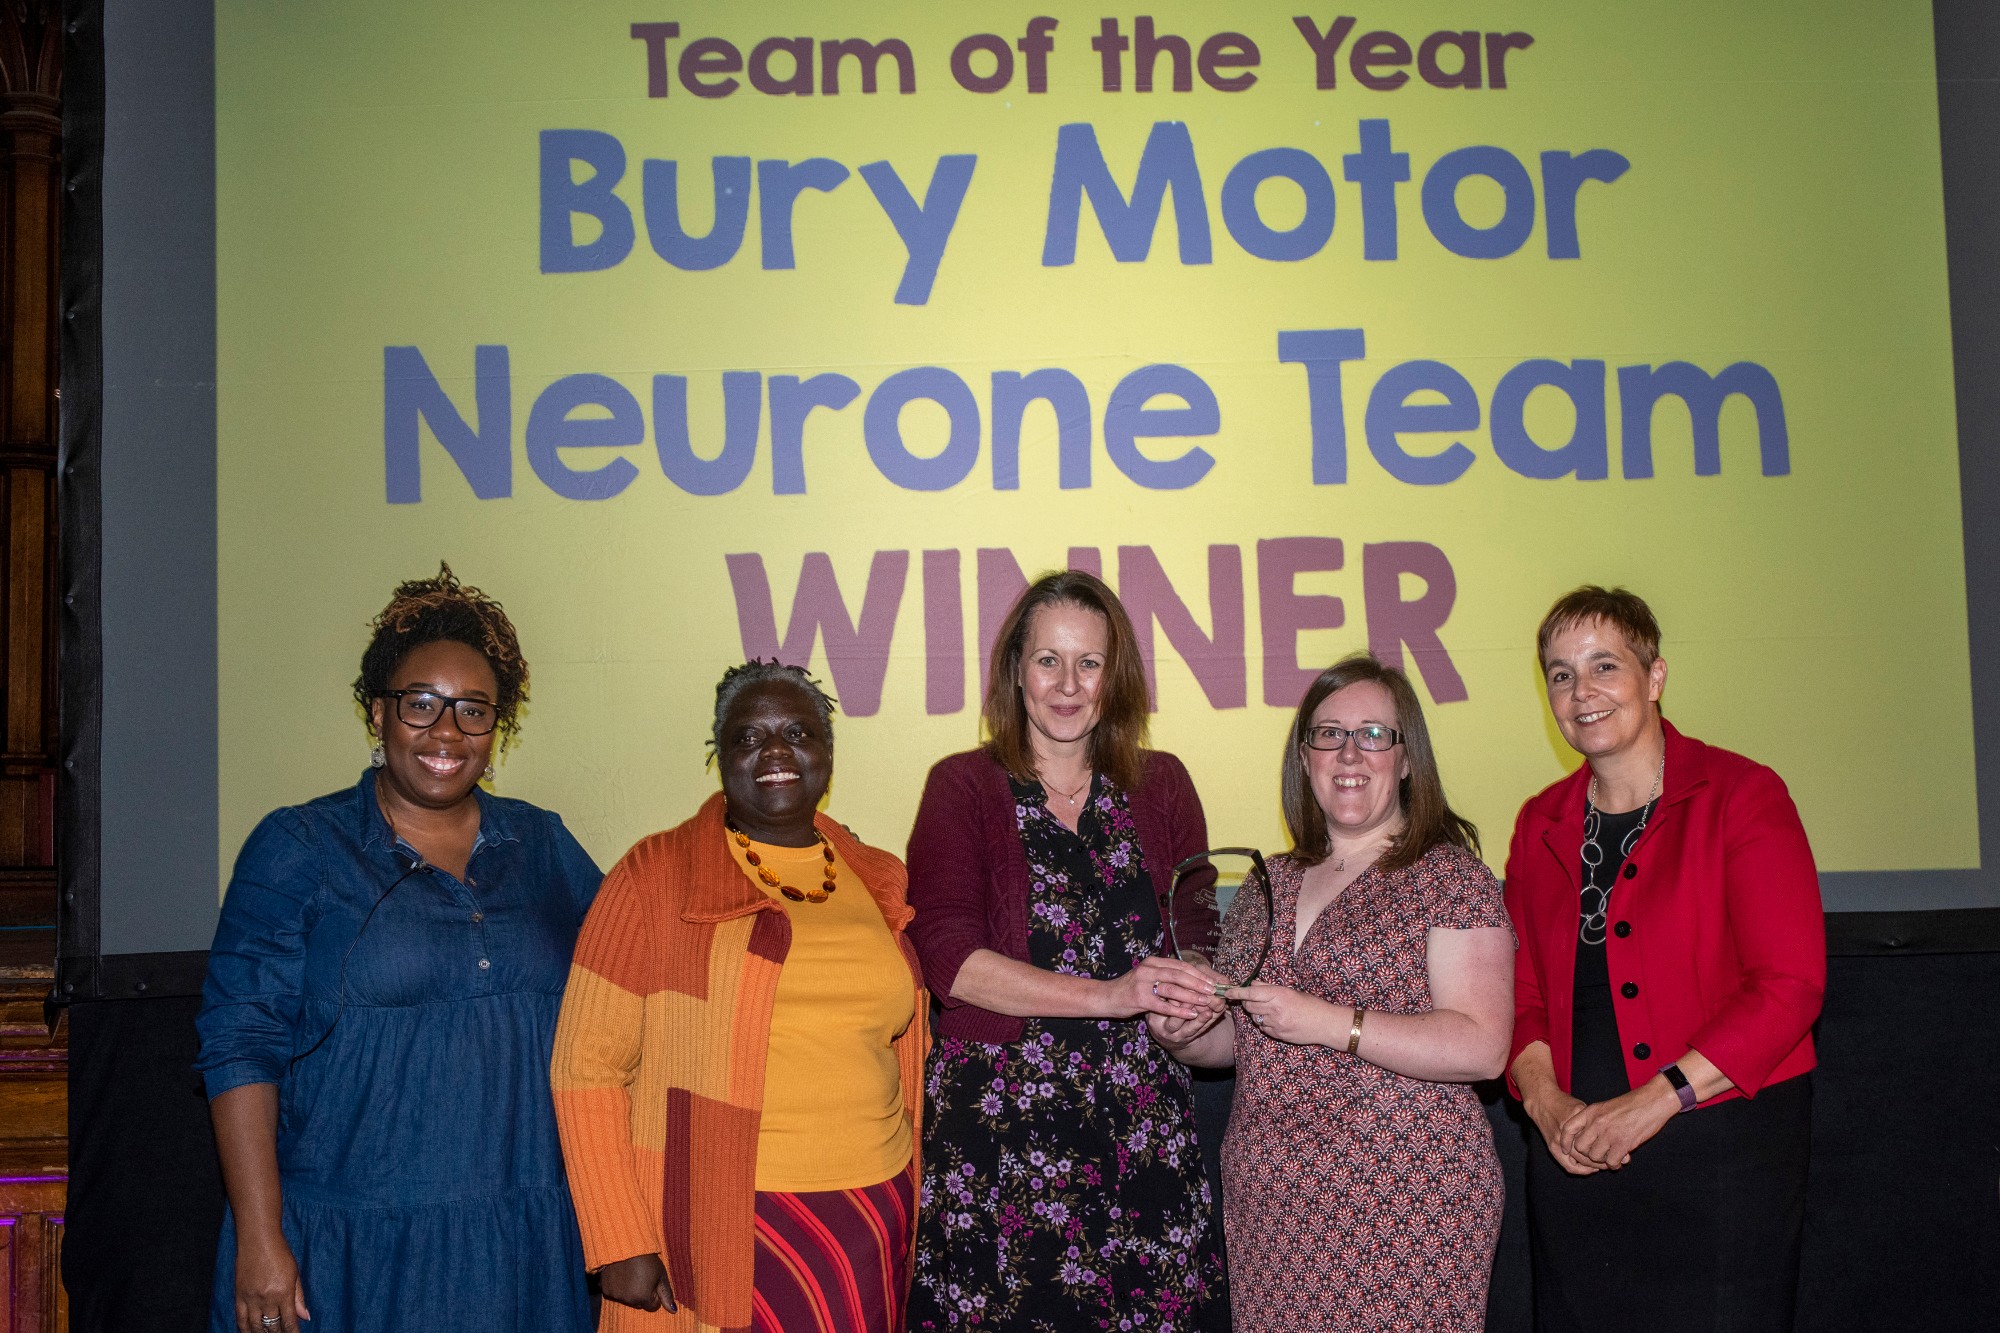 Bury motor neurone team of the year.jpg